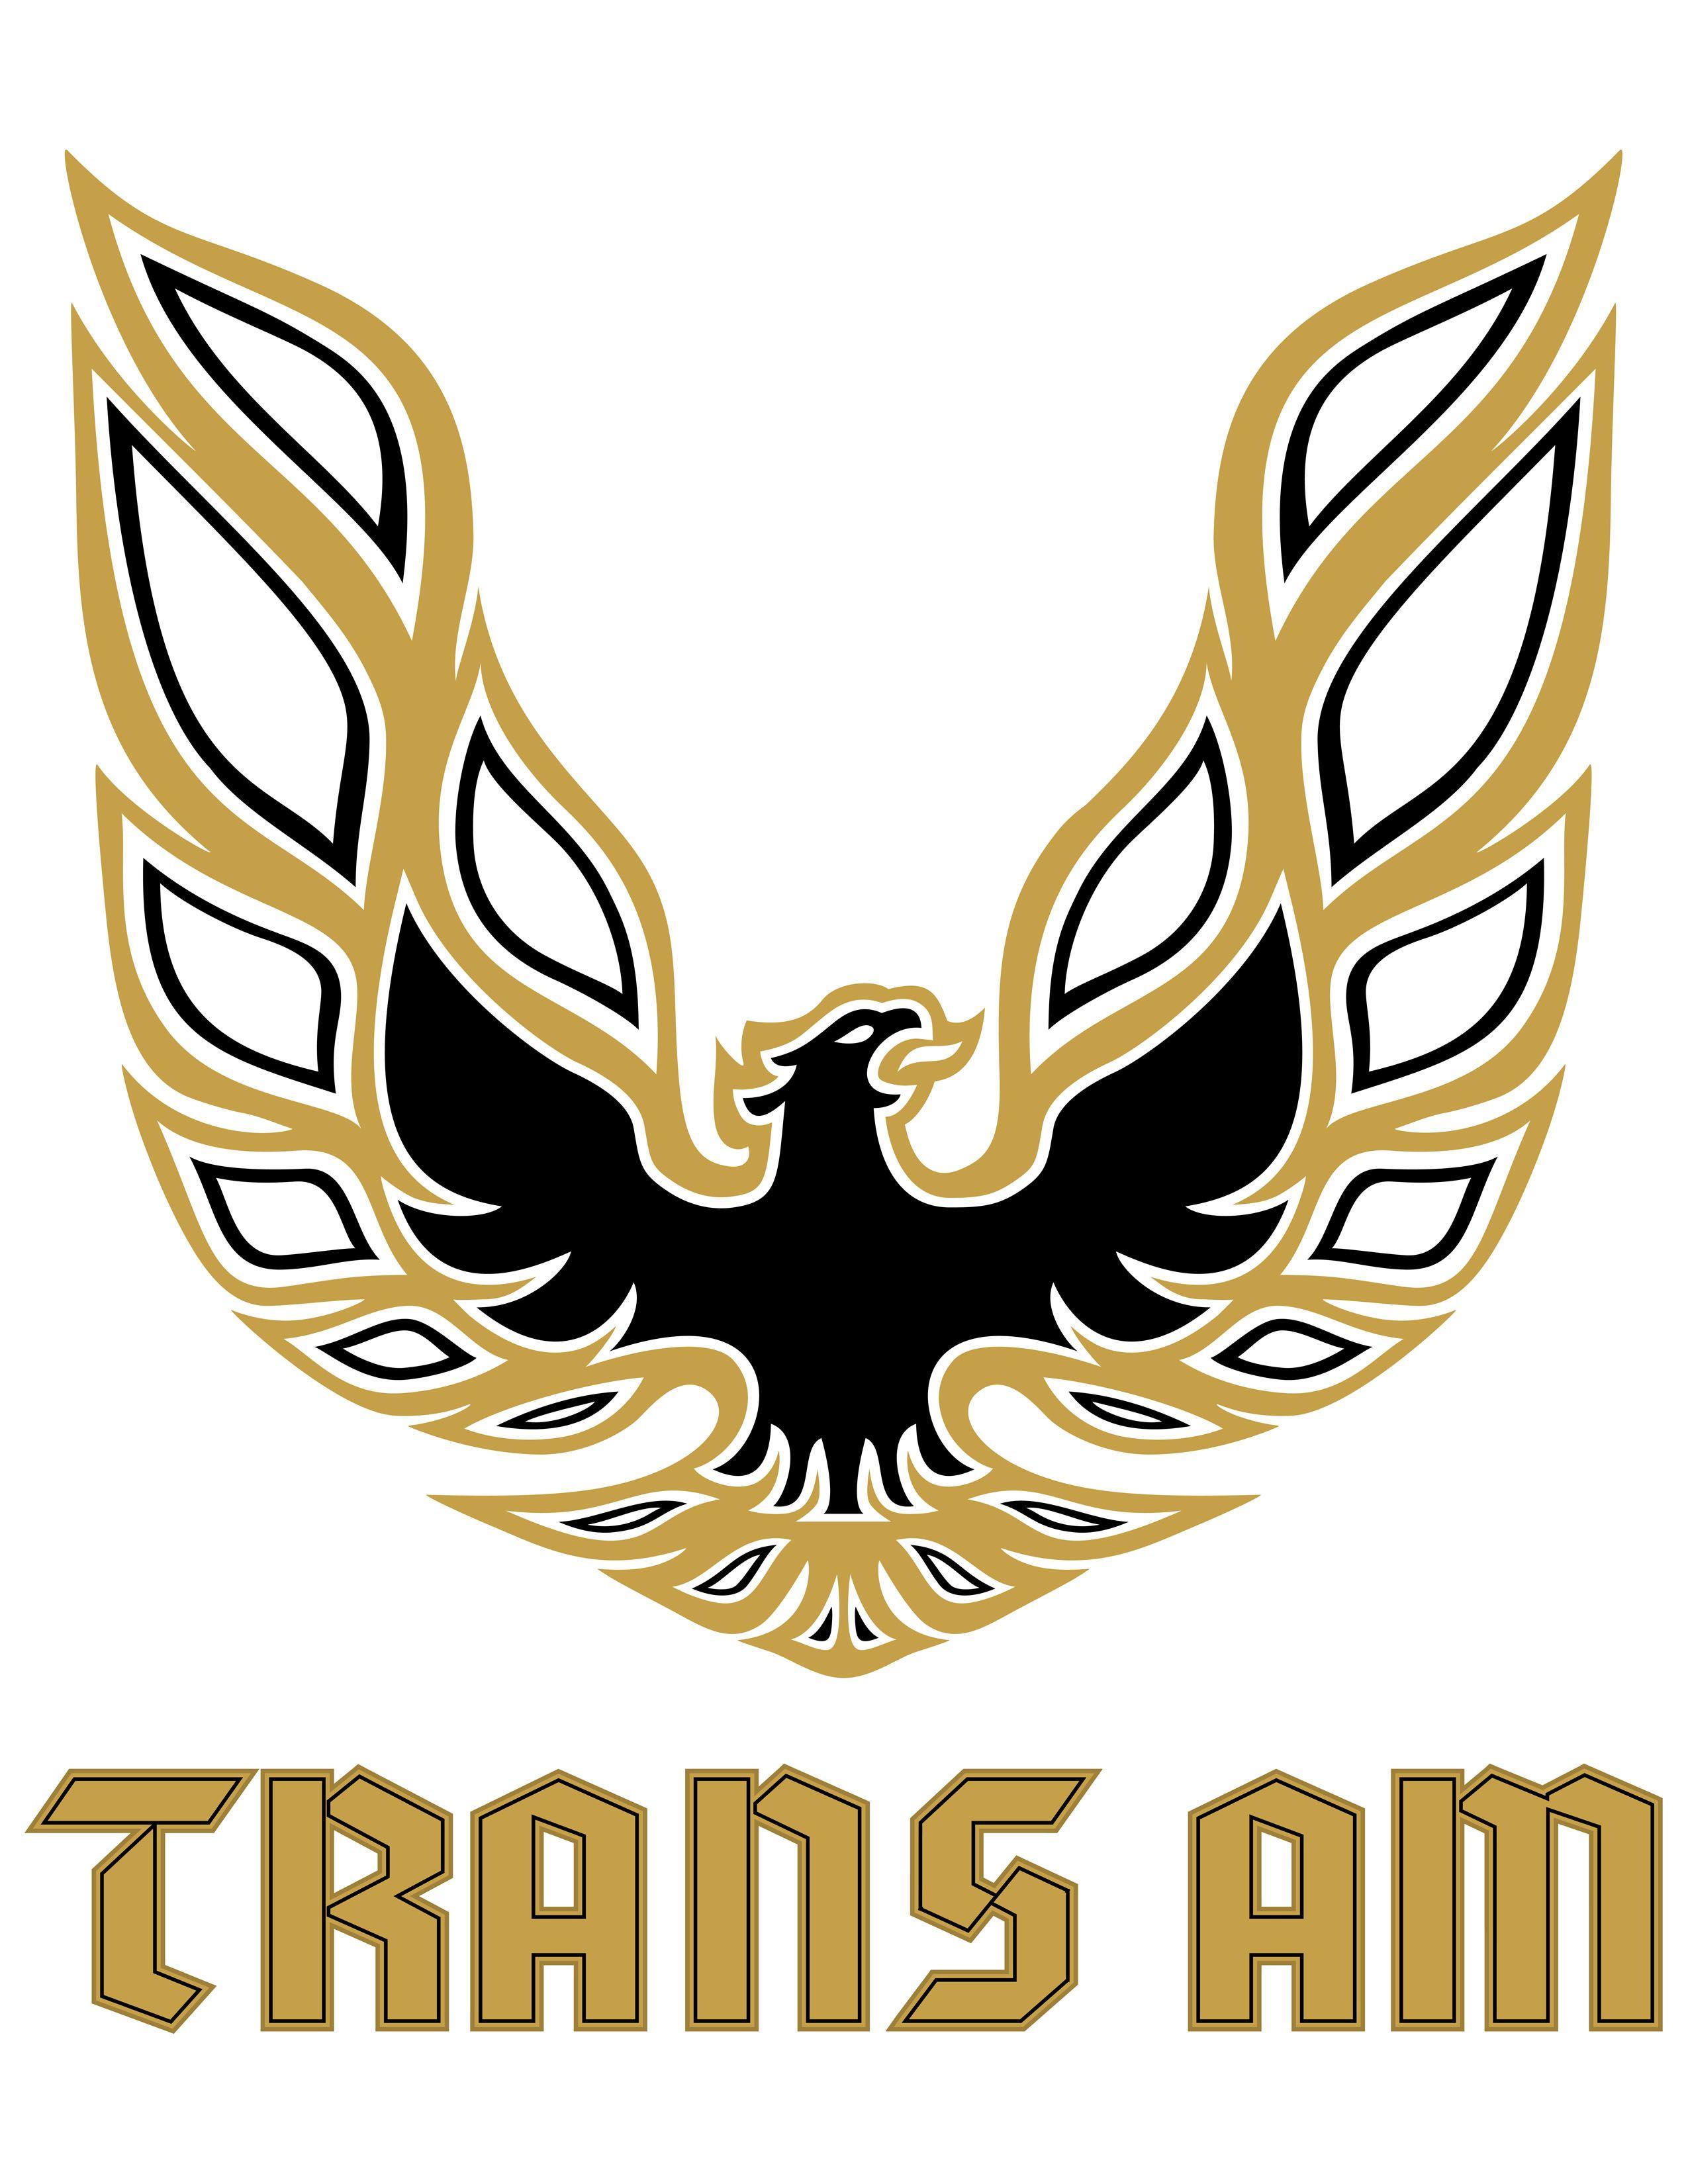 Firebird Logo - 1978 trans am decal | ... 1978 Trans Am. The text logo is the front ...